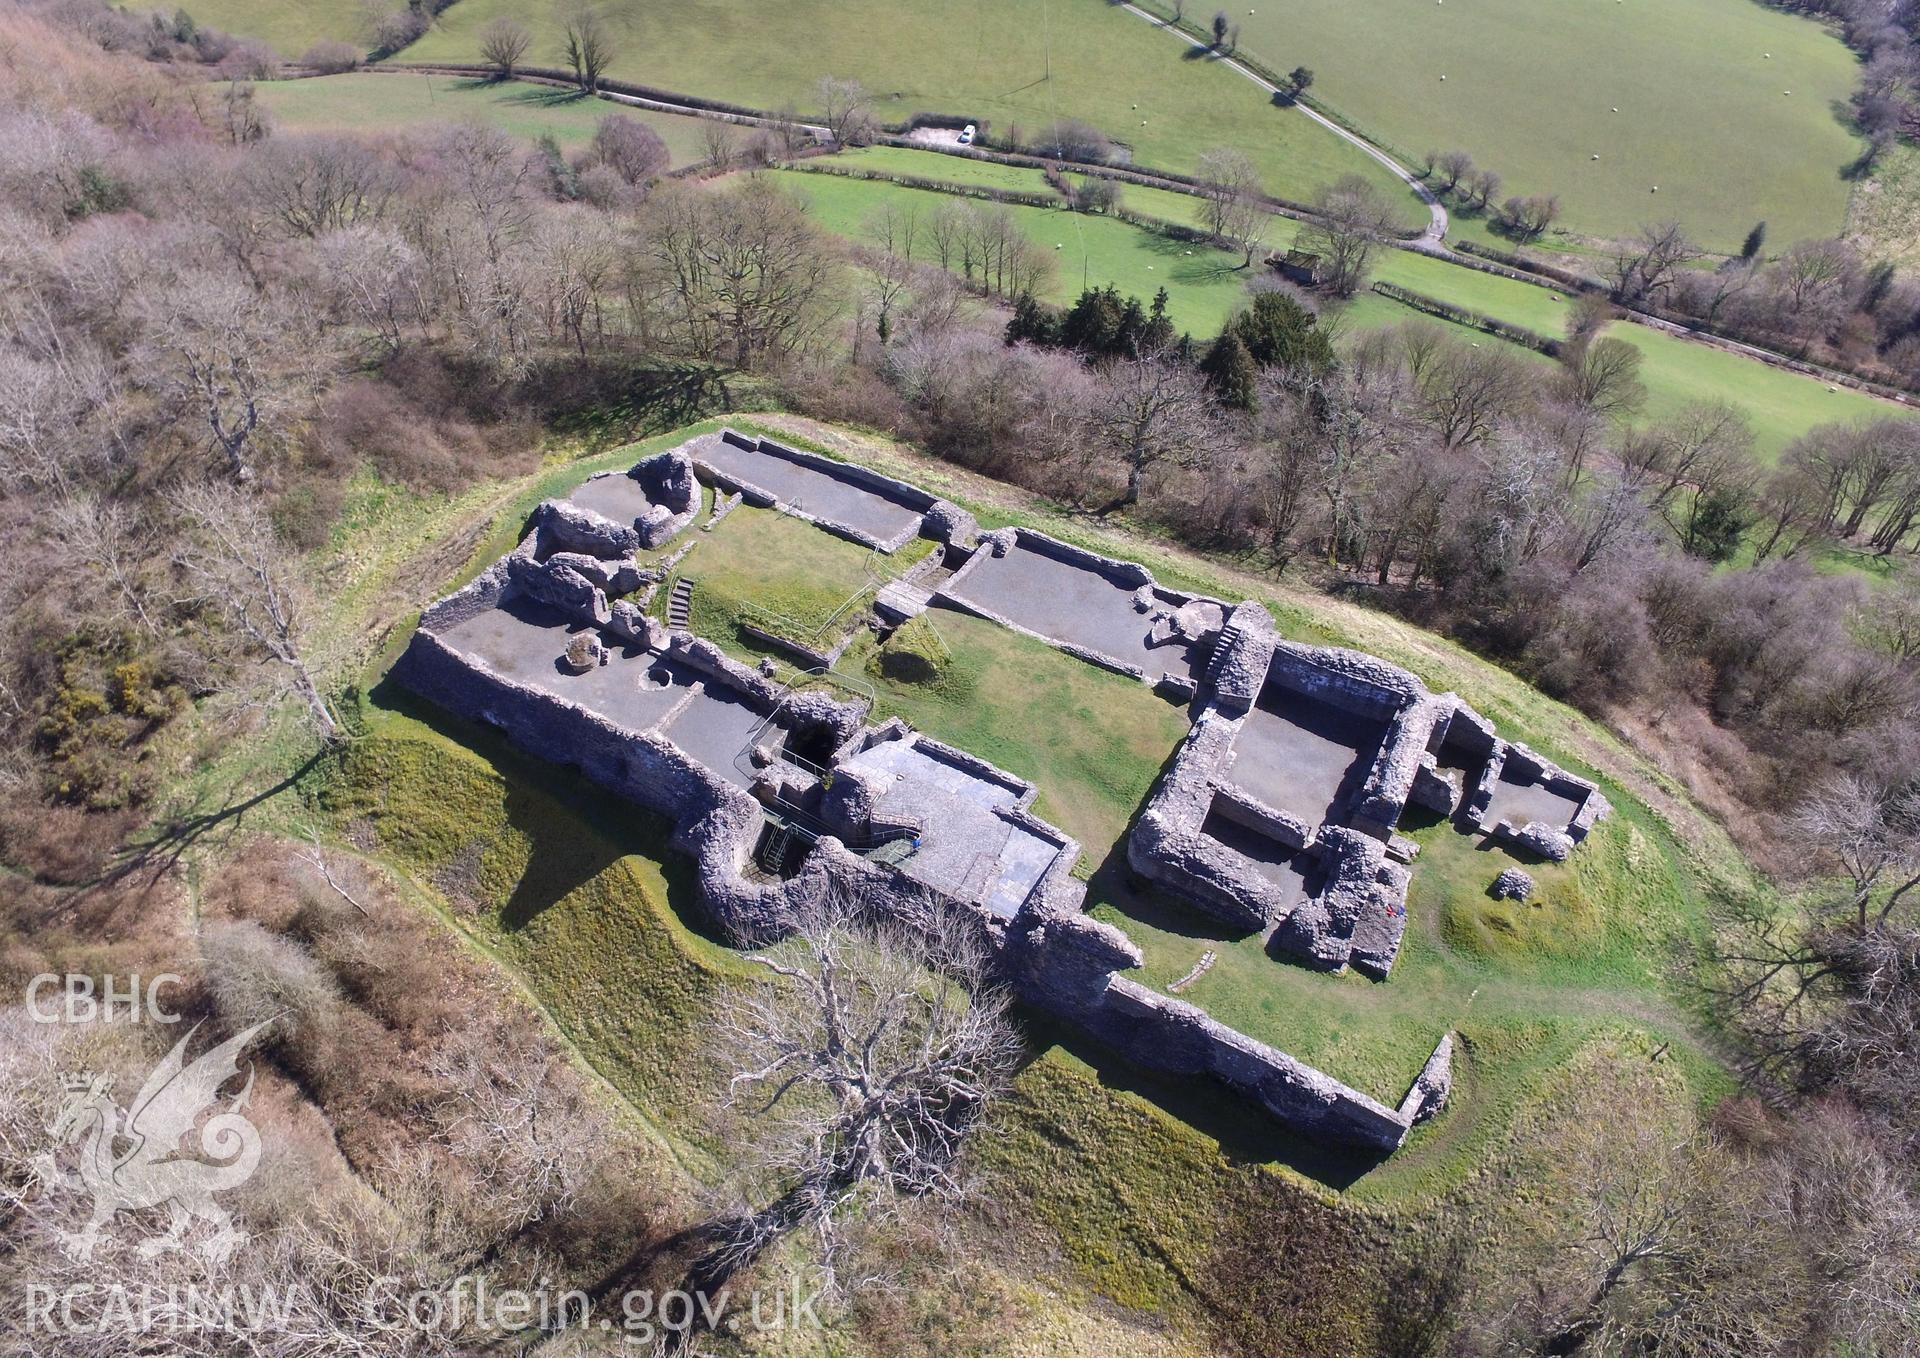 Colour photo showing view of Dolforwyn Castle, Abermule, taken by Paul R. Davis, 2018.